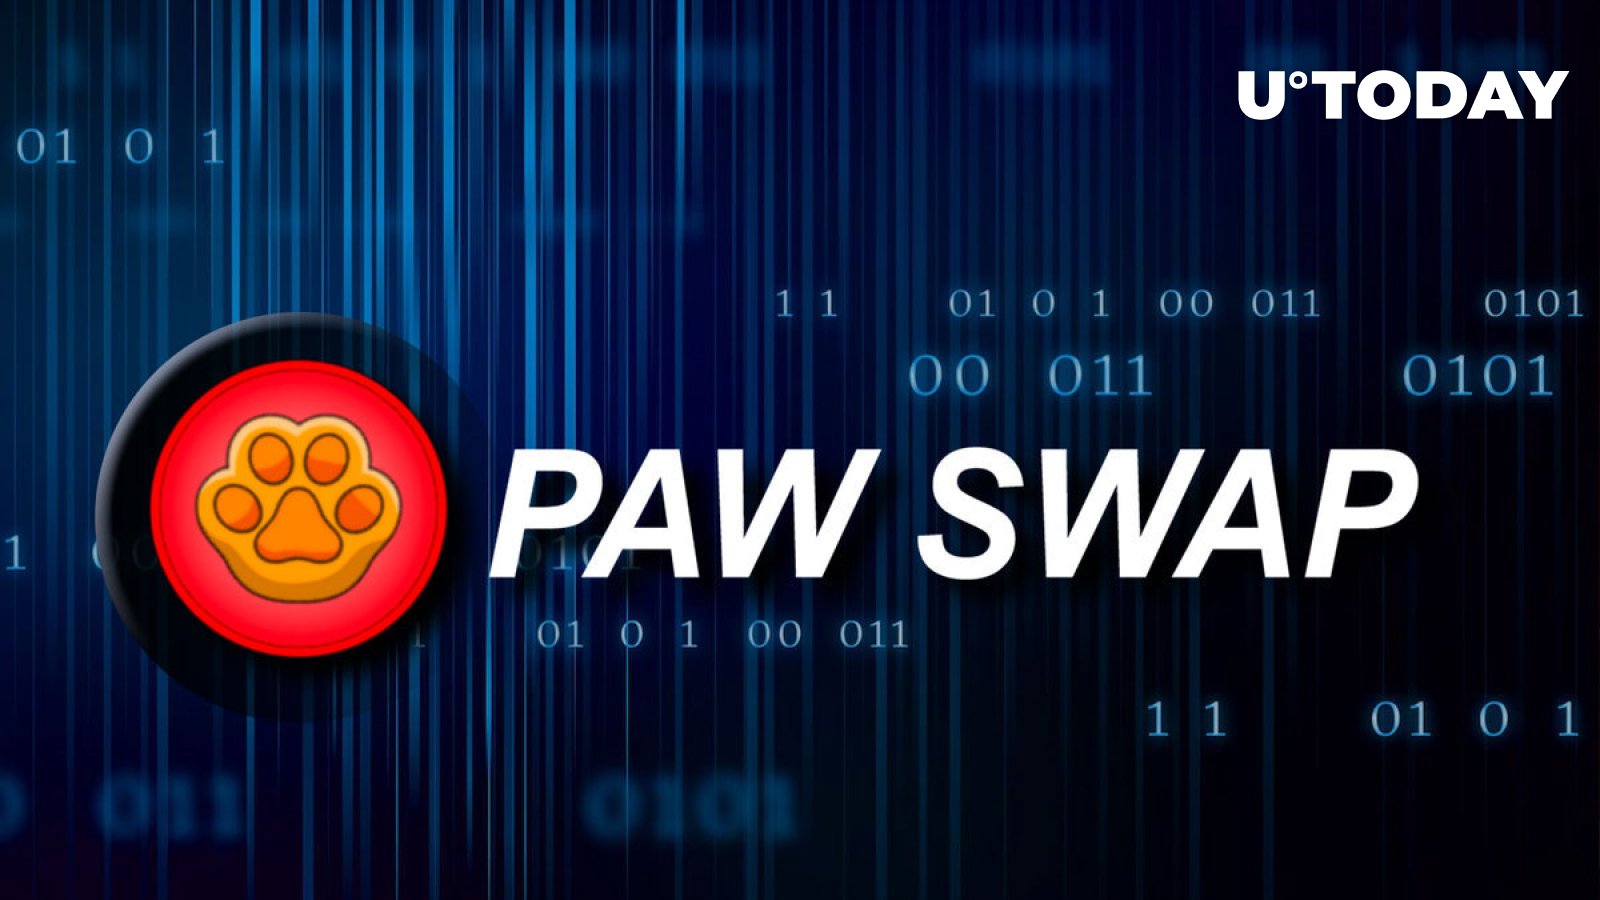 PawSwap به فشار دادن PAW به جلو ادامه می دهد، در گفتگو با 7 تبادل درباره لیست های بالقوه